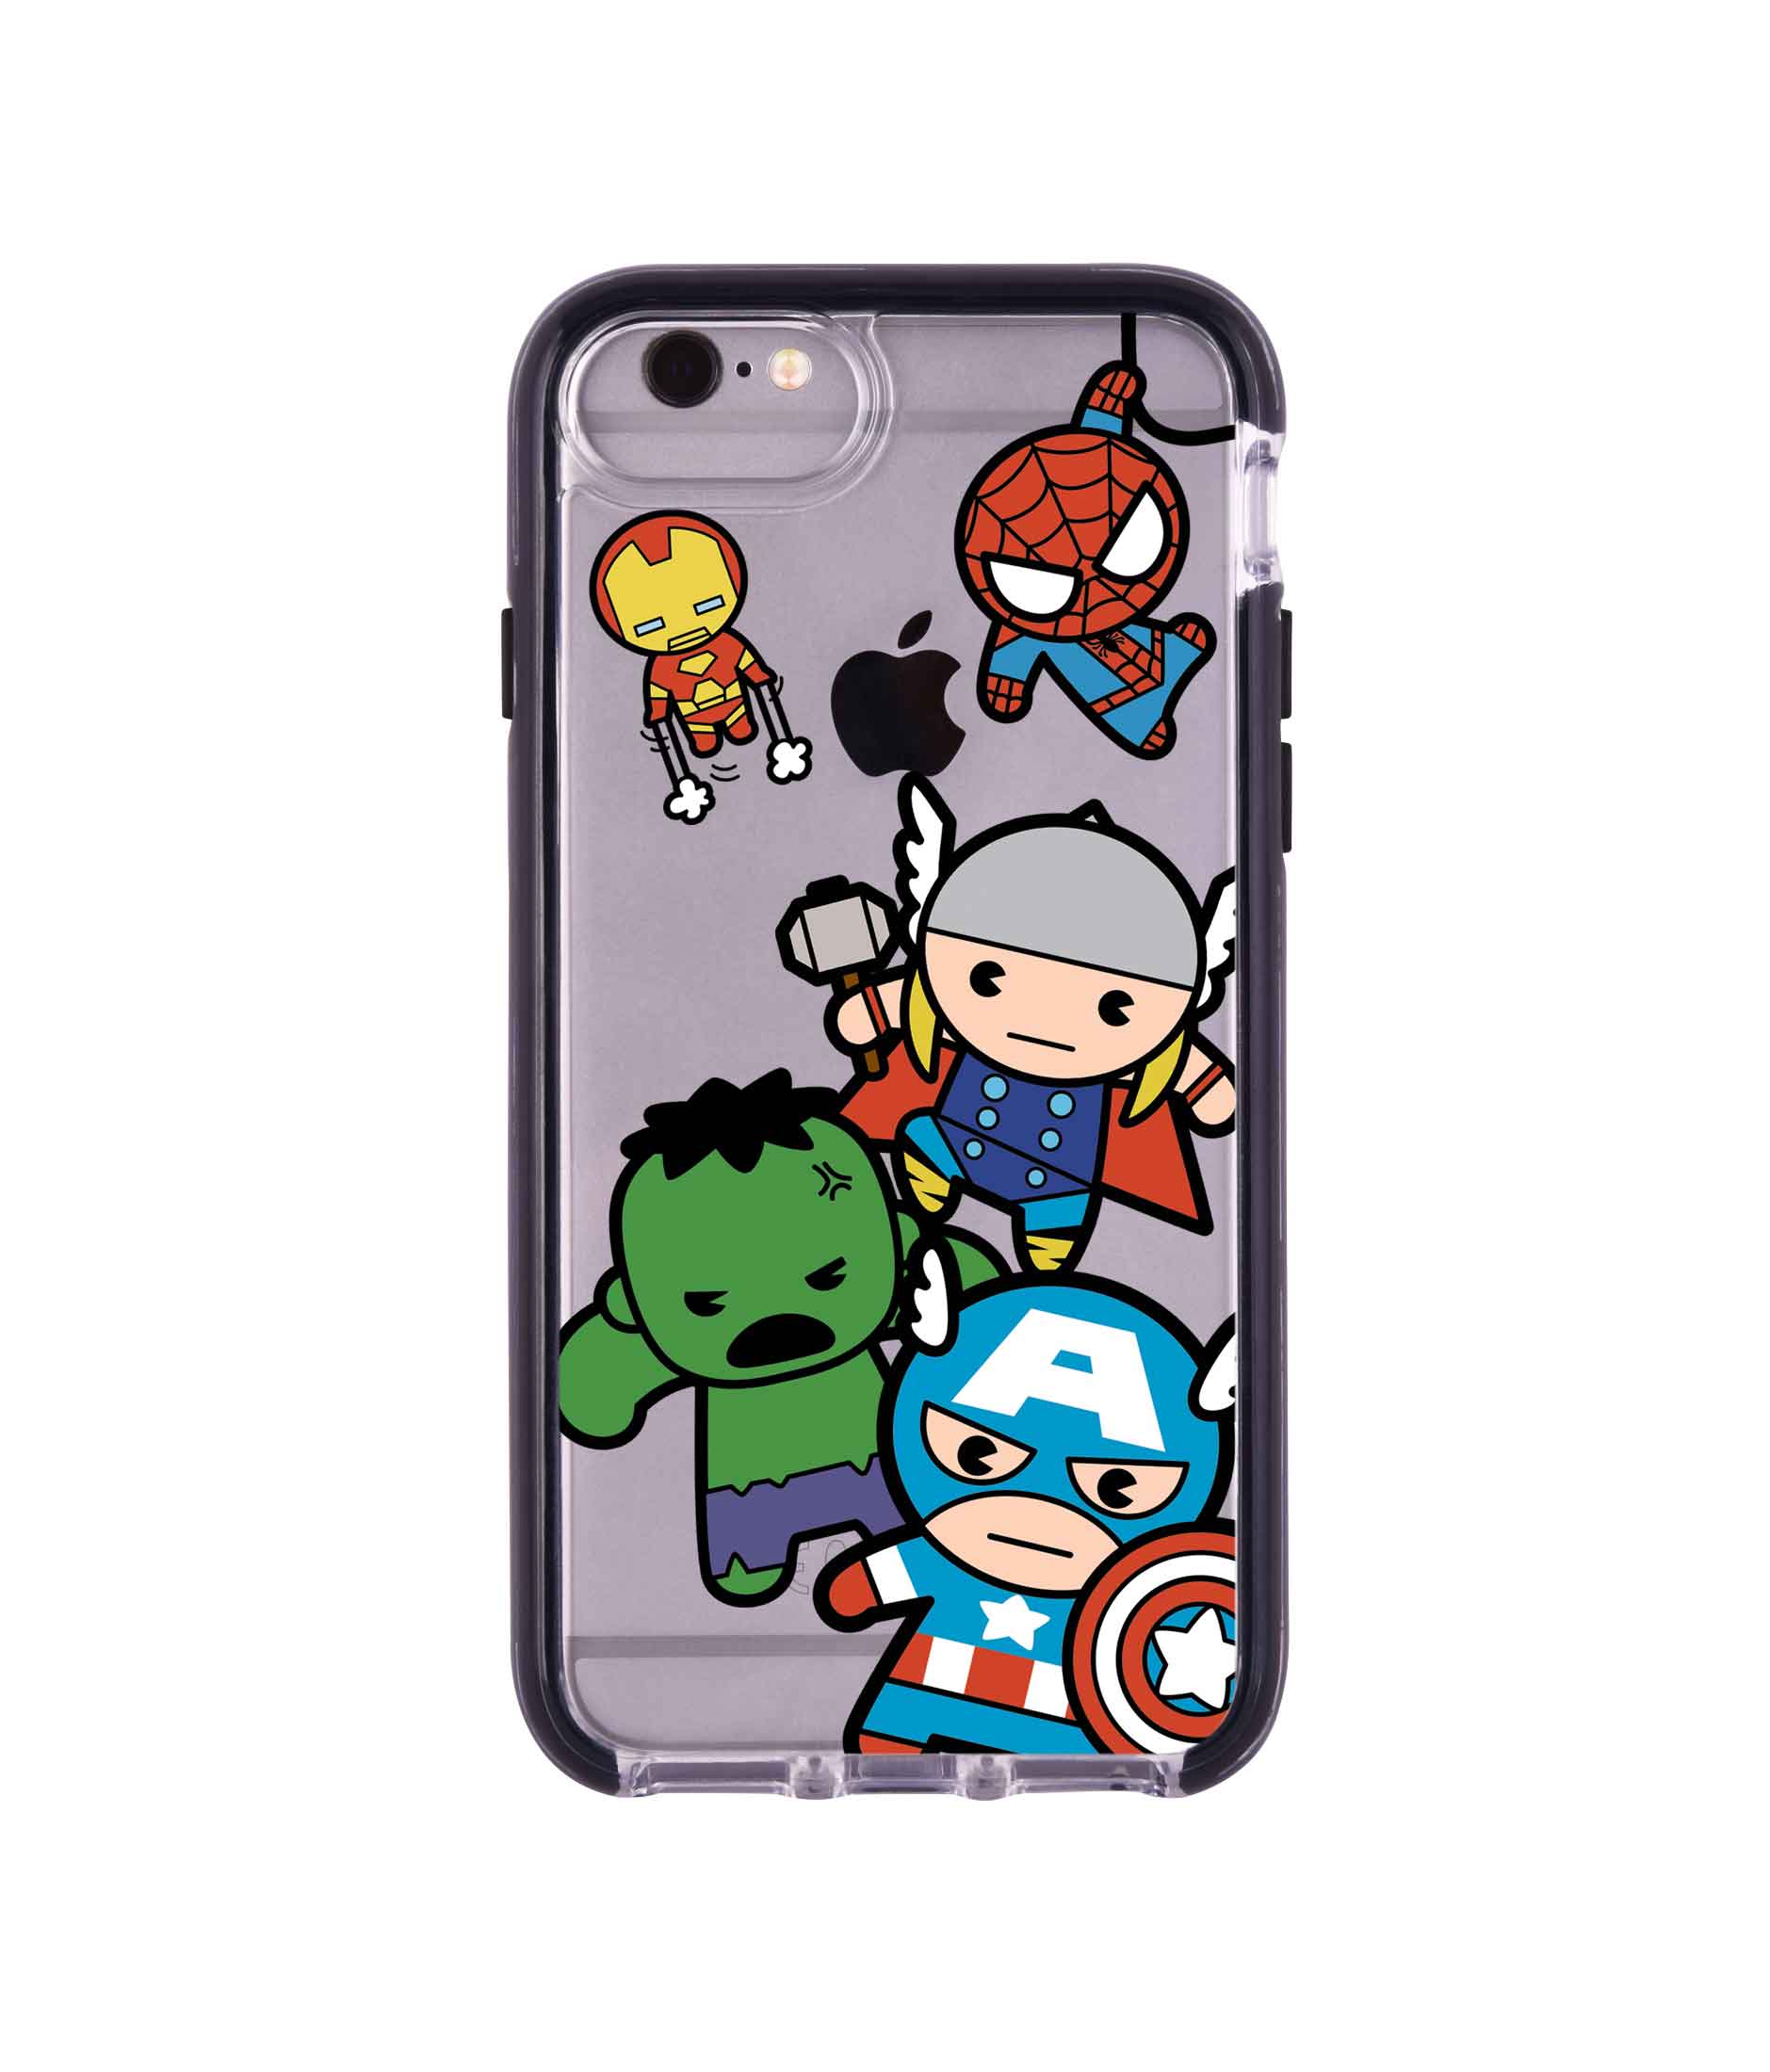 Kawaii Art Marvel Comics - Extreme Phone Case for iPhone 6